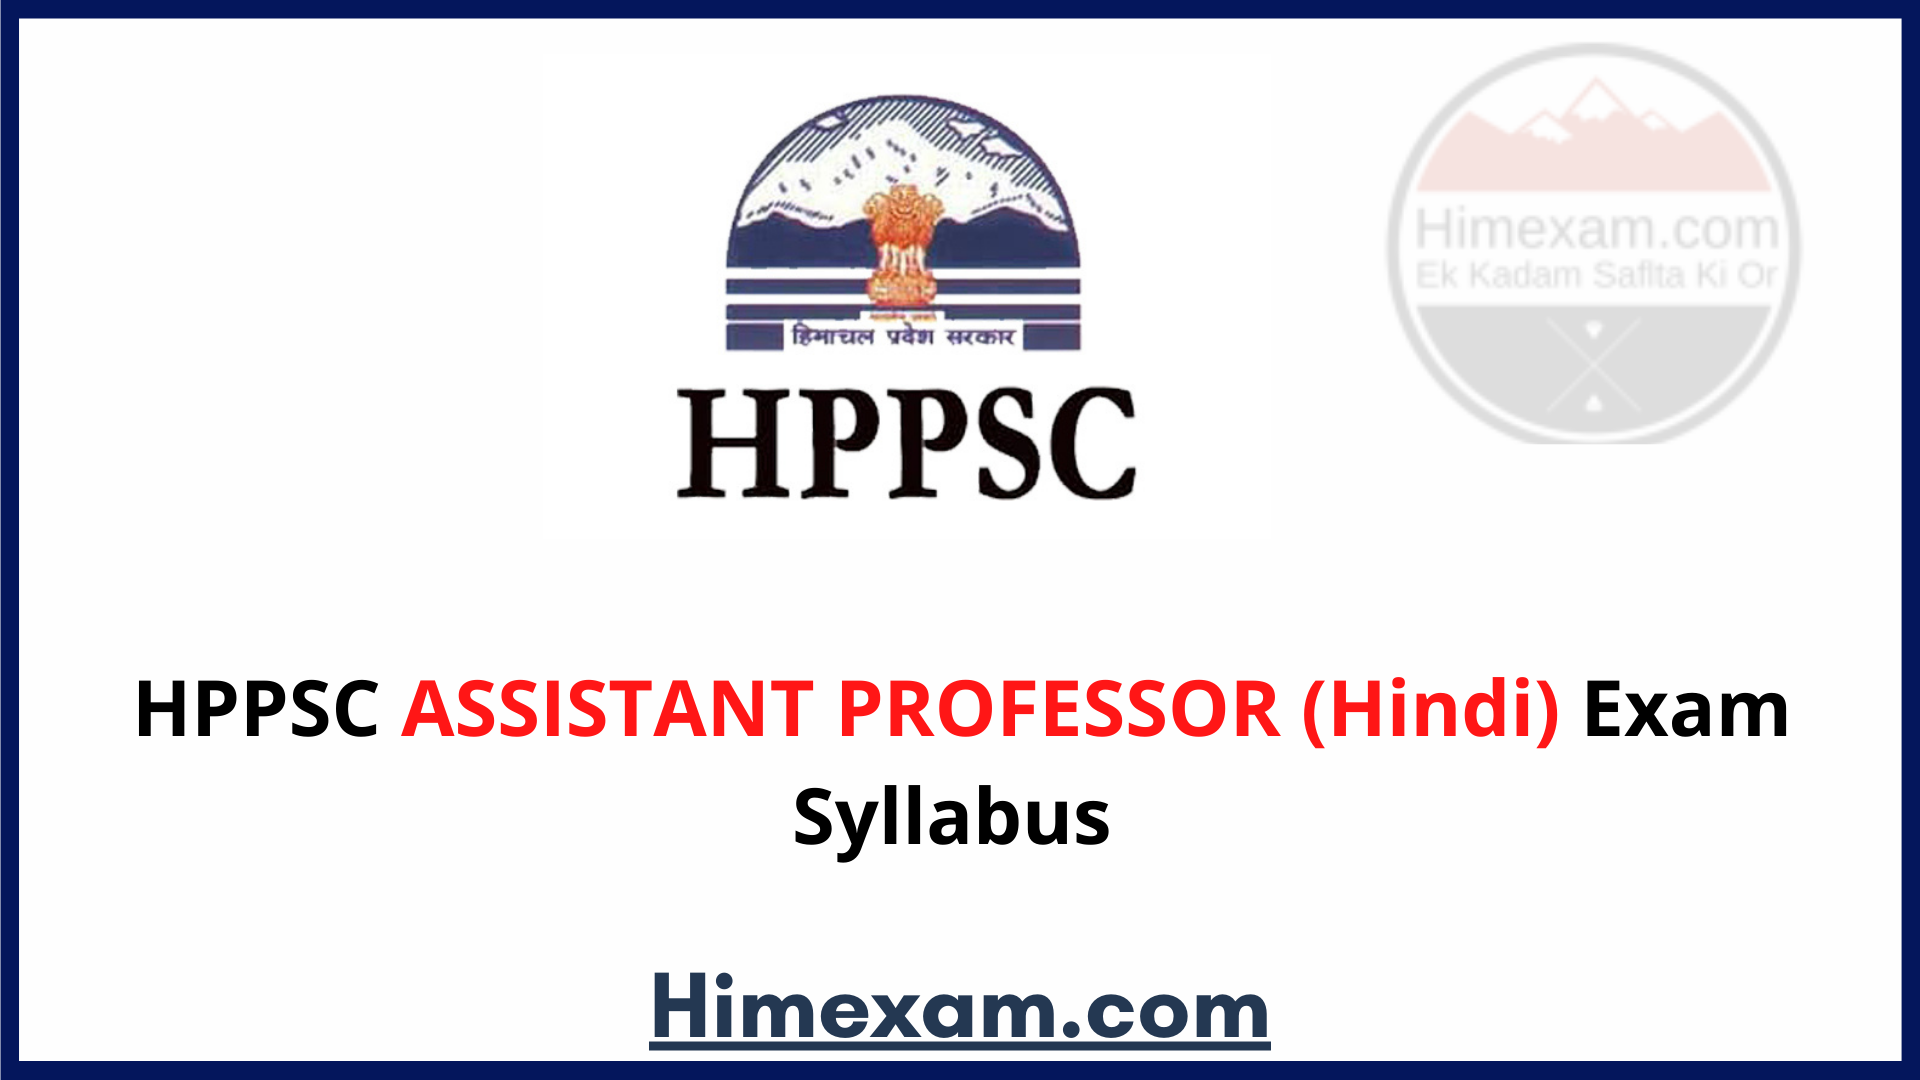 HPPSC ASSISTANT PROFESSOR (Hindi) Exam Syllabus